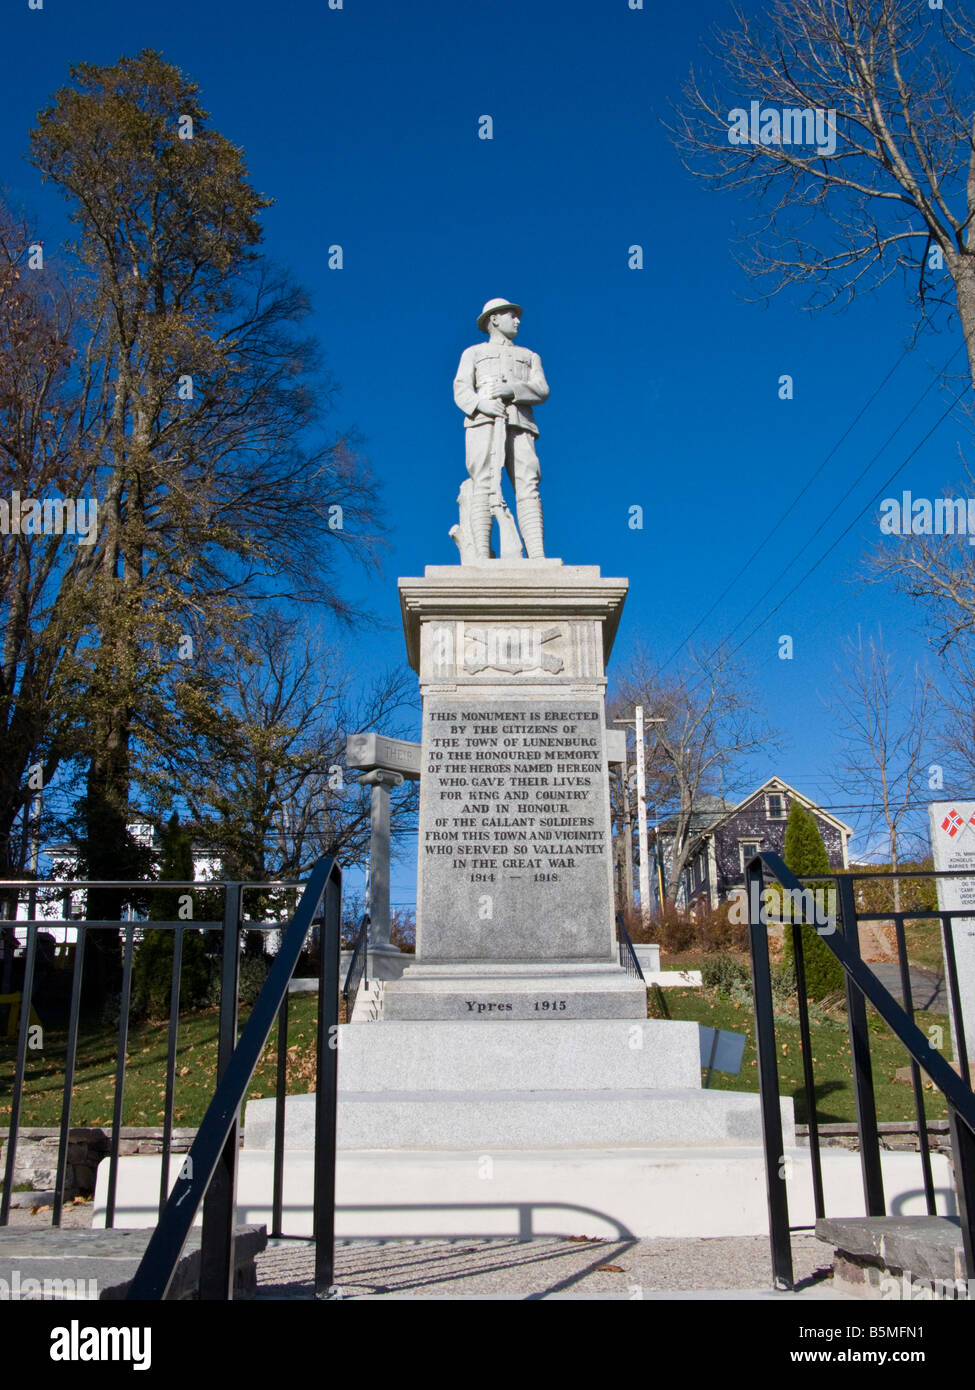 Great War Memorial First World War Memorial in Lunenburg with First World War soldier statue Stock Photo